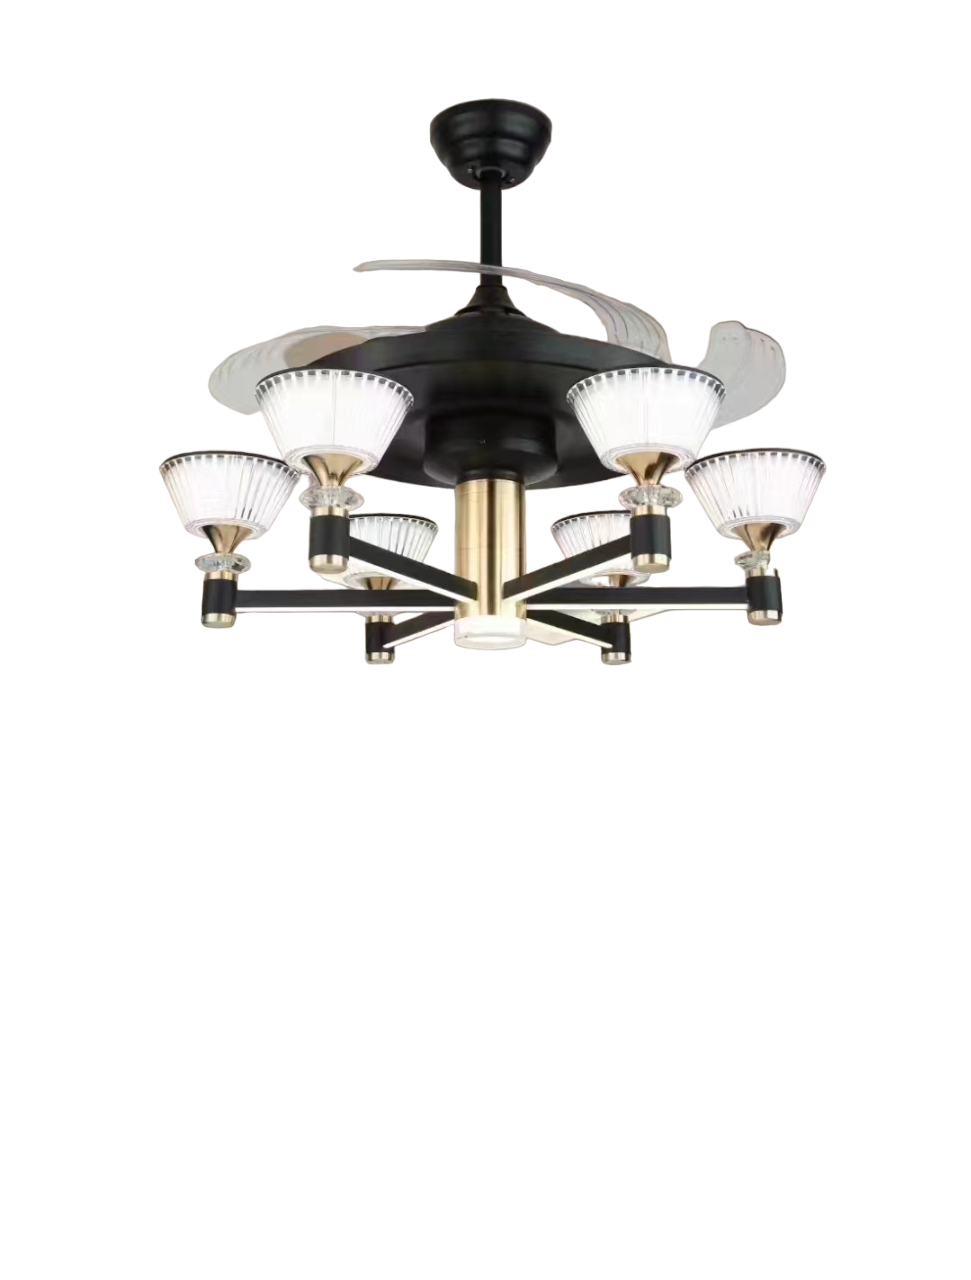 Qulik 48-inch Chandelier Ceiling Fan - Modern Design, LED Light, Remote Control